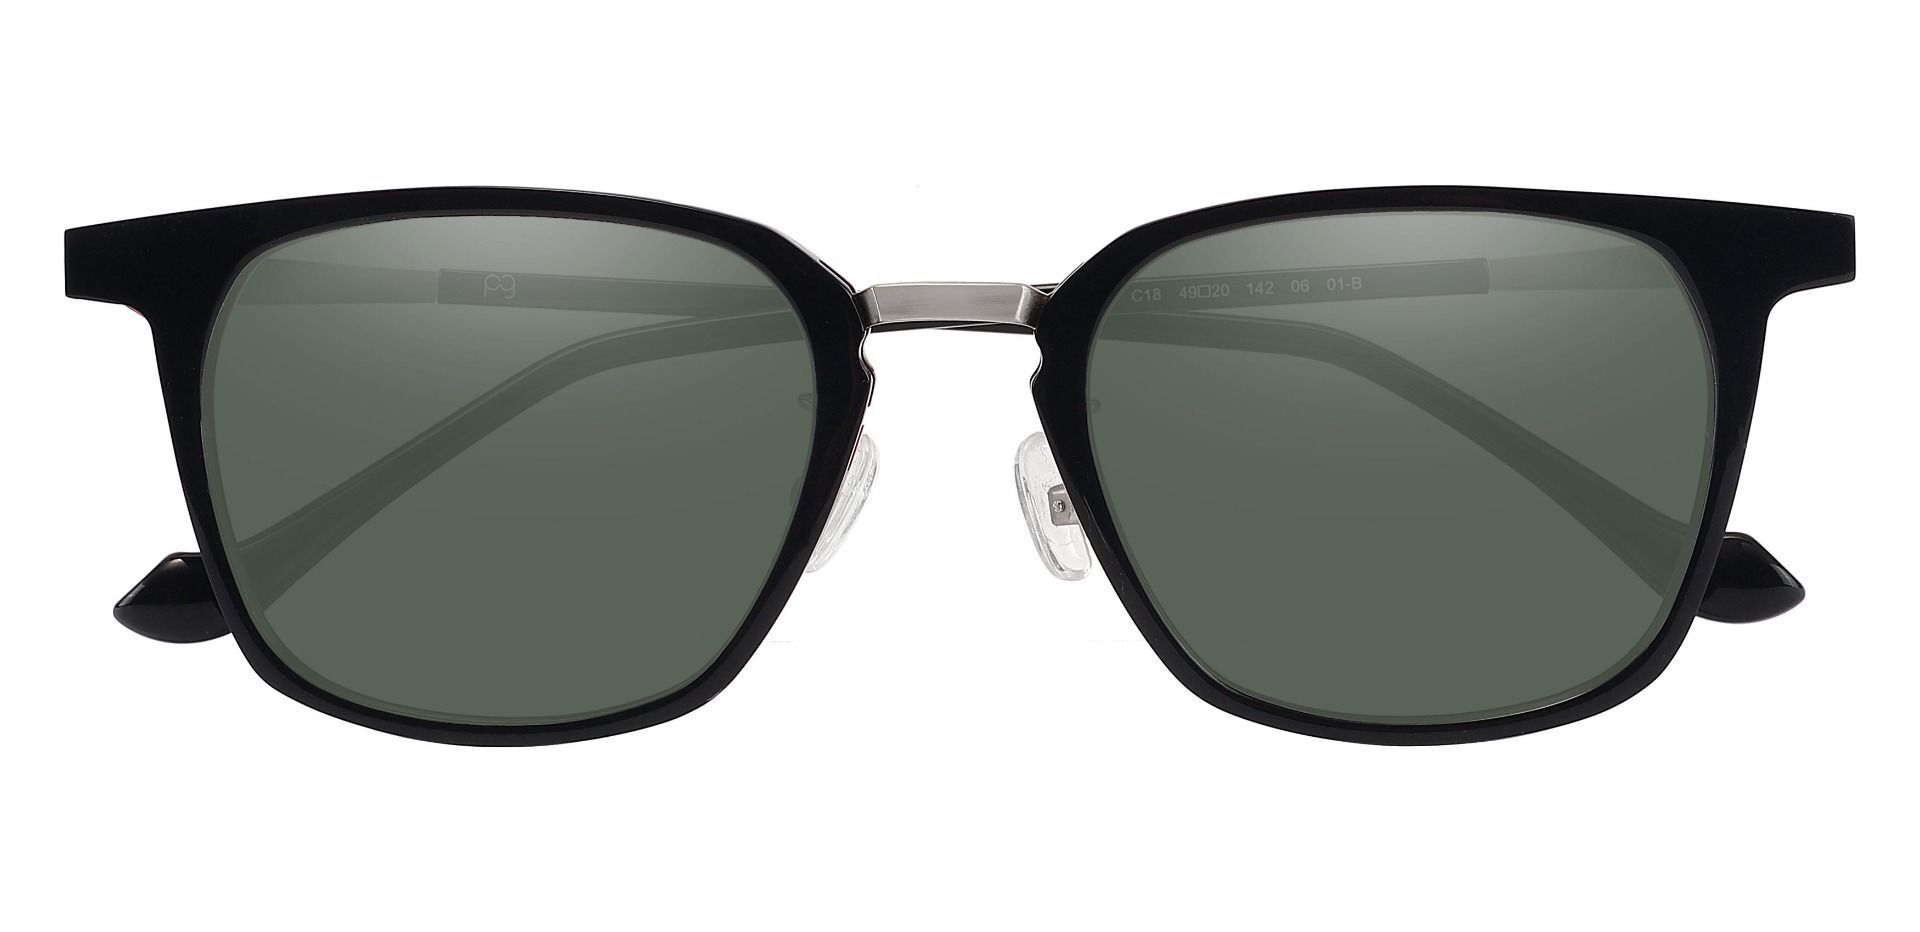 Rex Square Reading Sunglasses - Black Frame With Green Lenses